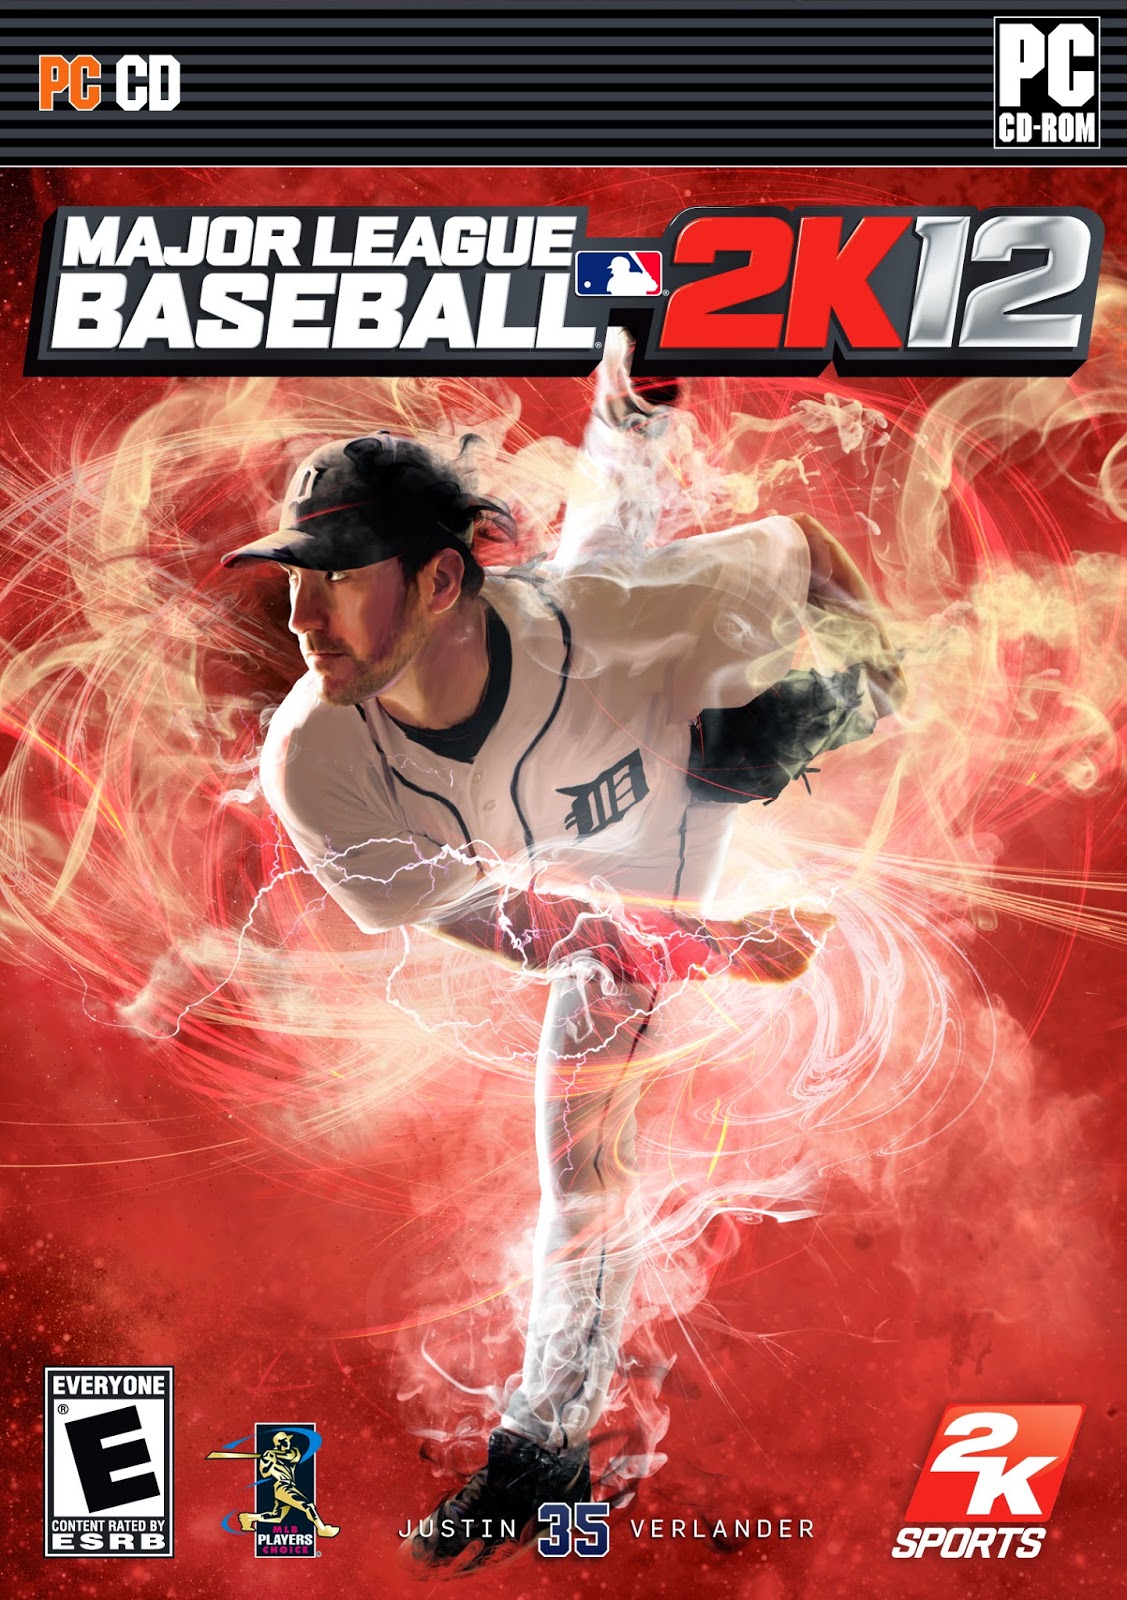 Major League Baseball 2K12 Game - PC Full Version Free Download1127 x 1600